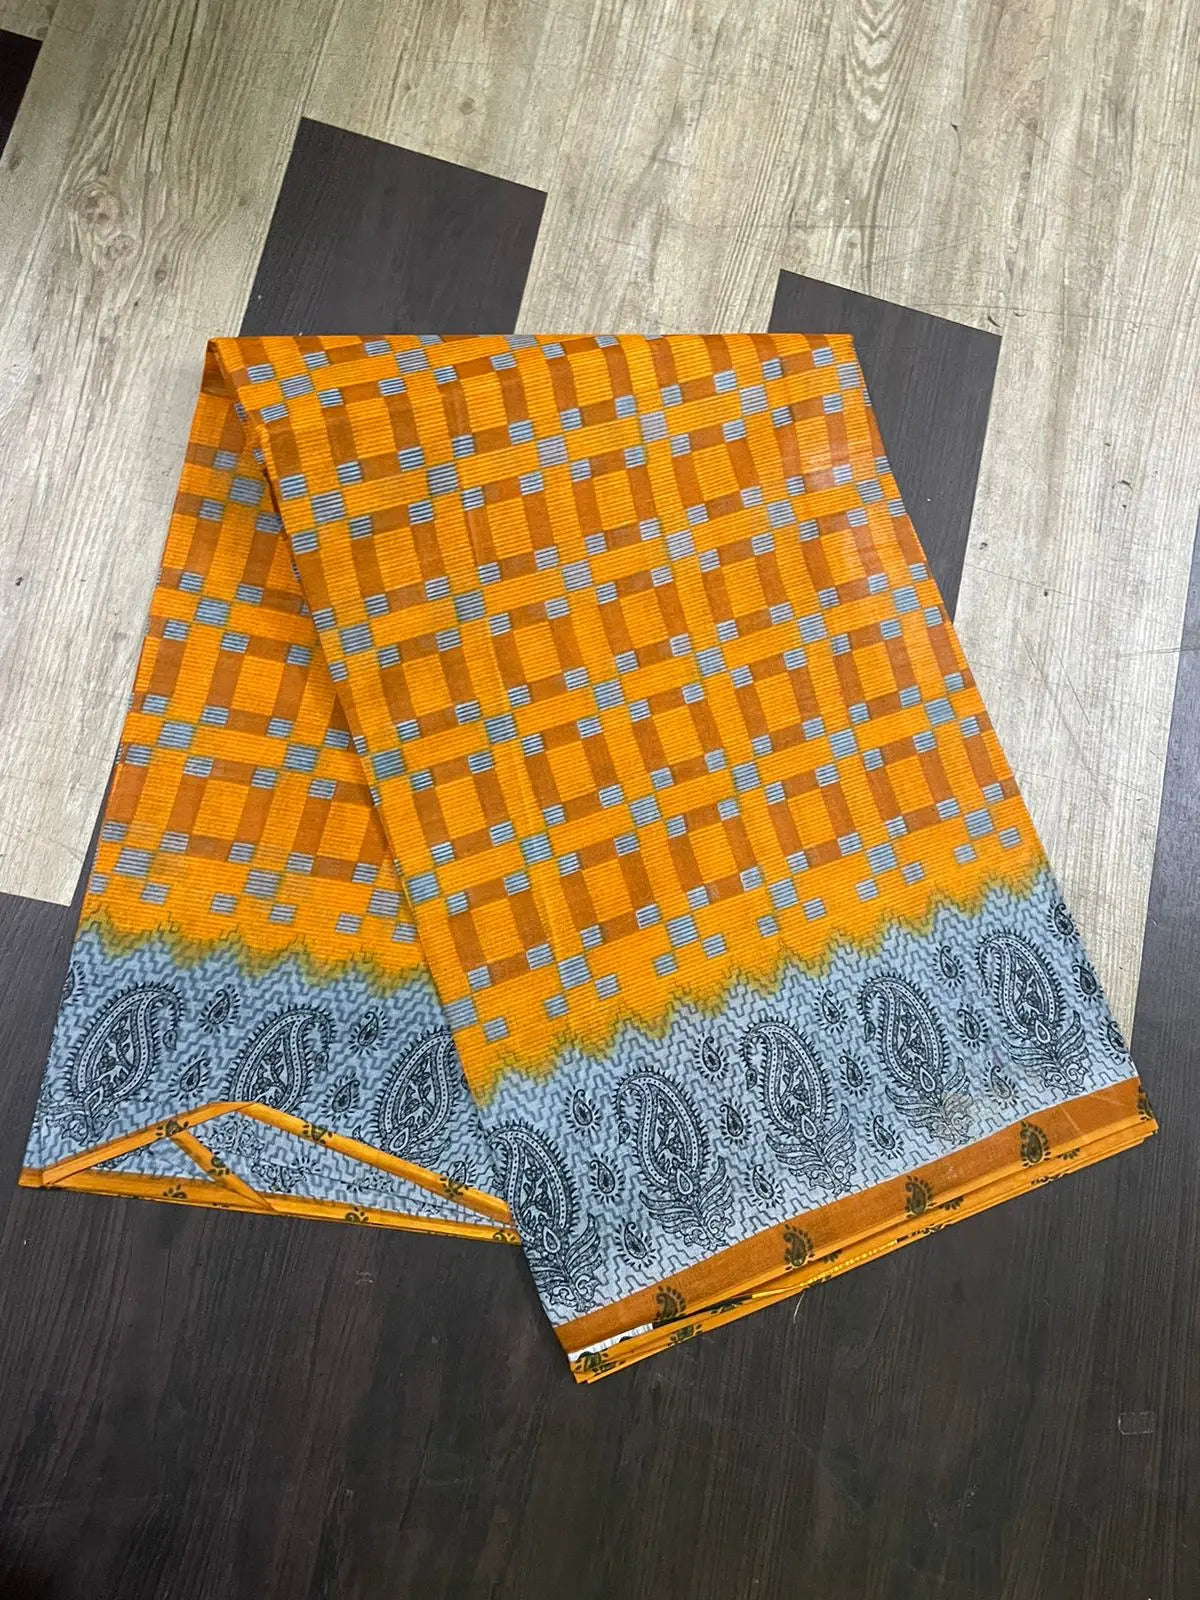 Cotton printed saree Putul's fashion